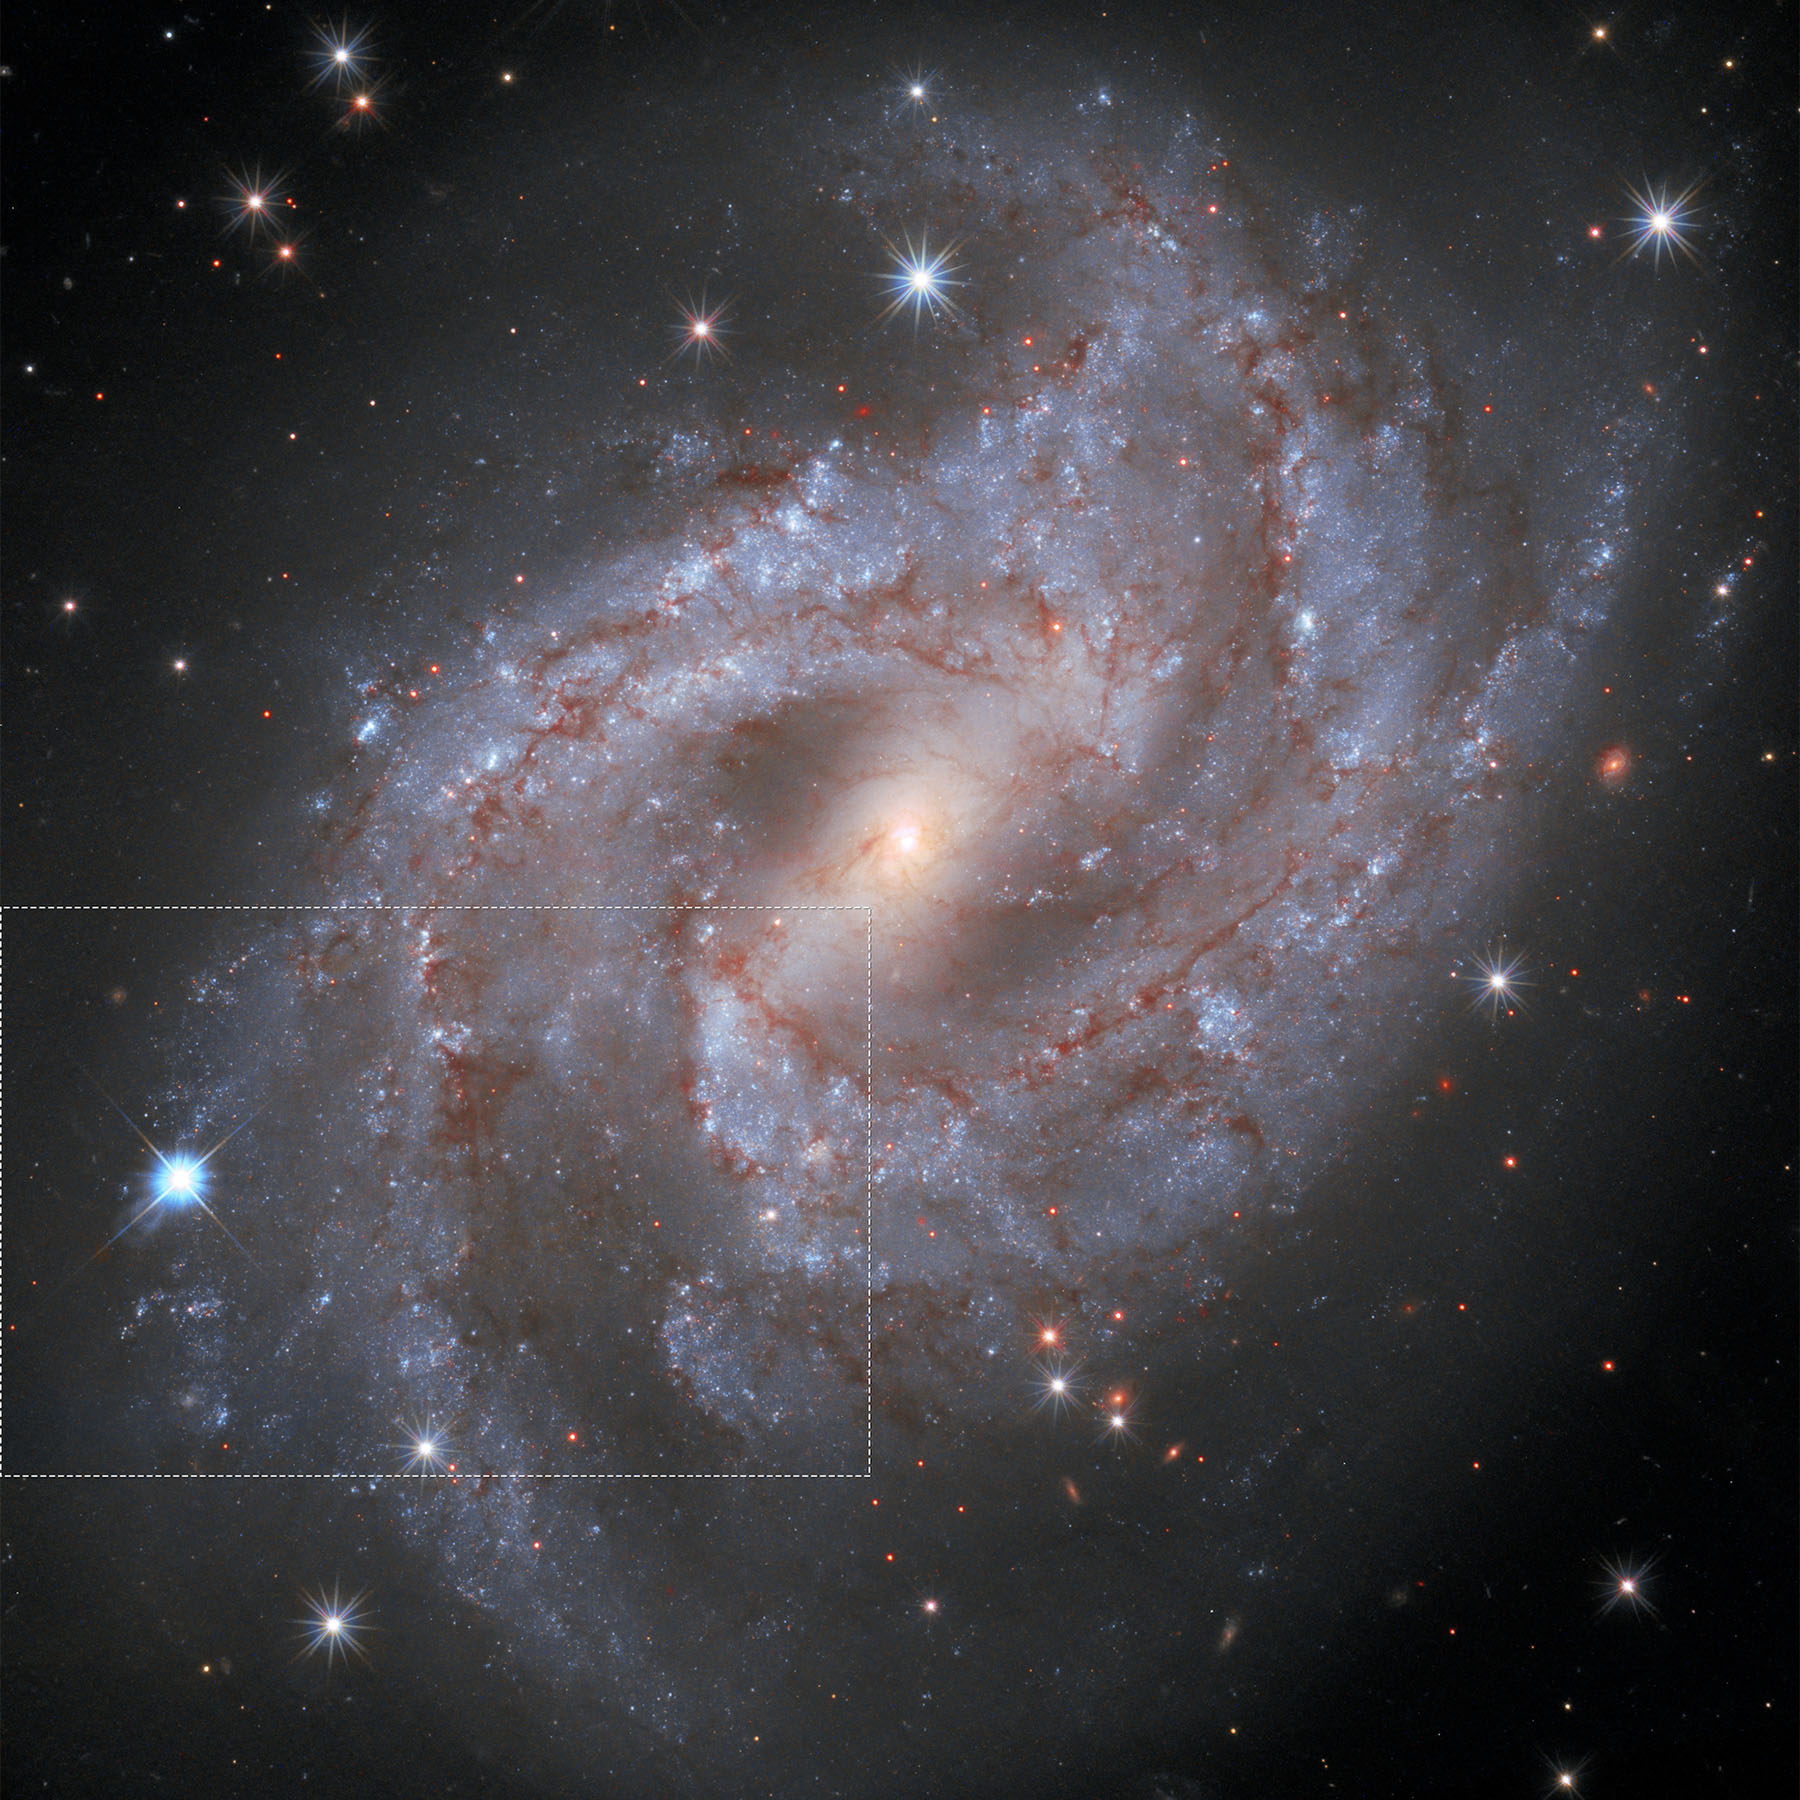 Galaxy NGC 2525